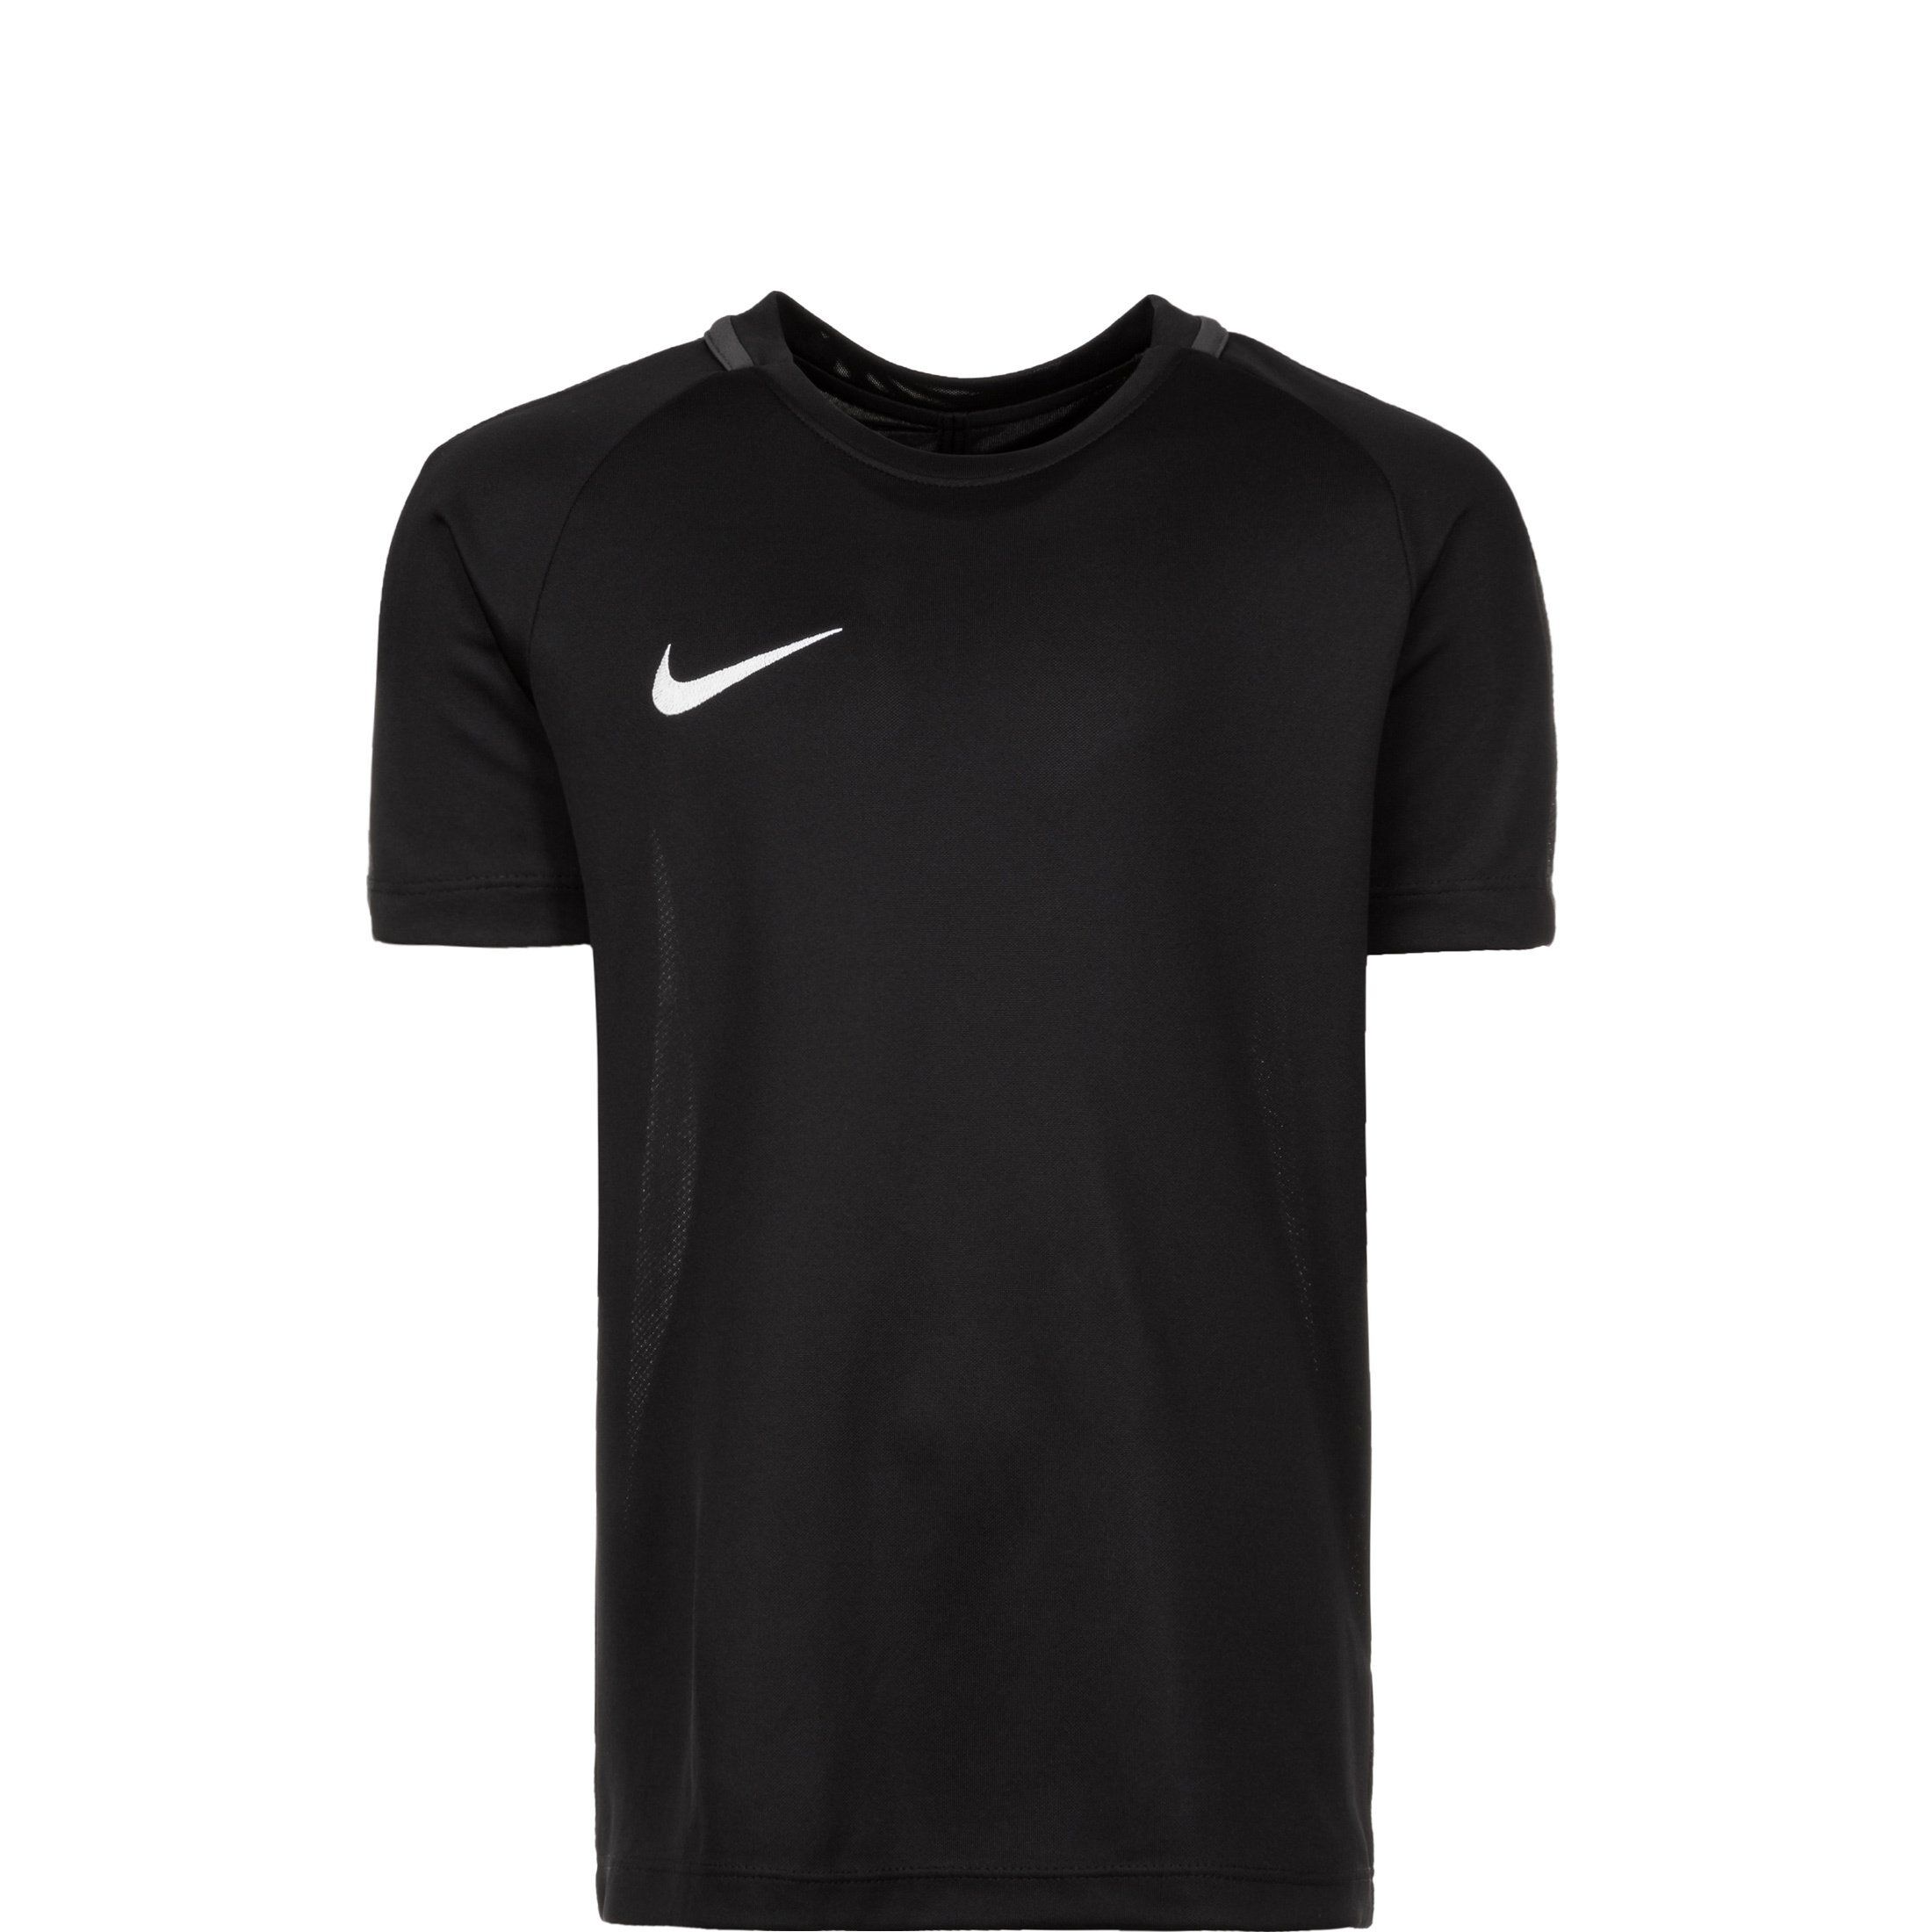 Nike Trainingsshirt »Dry Academy 18«, schwarz